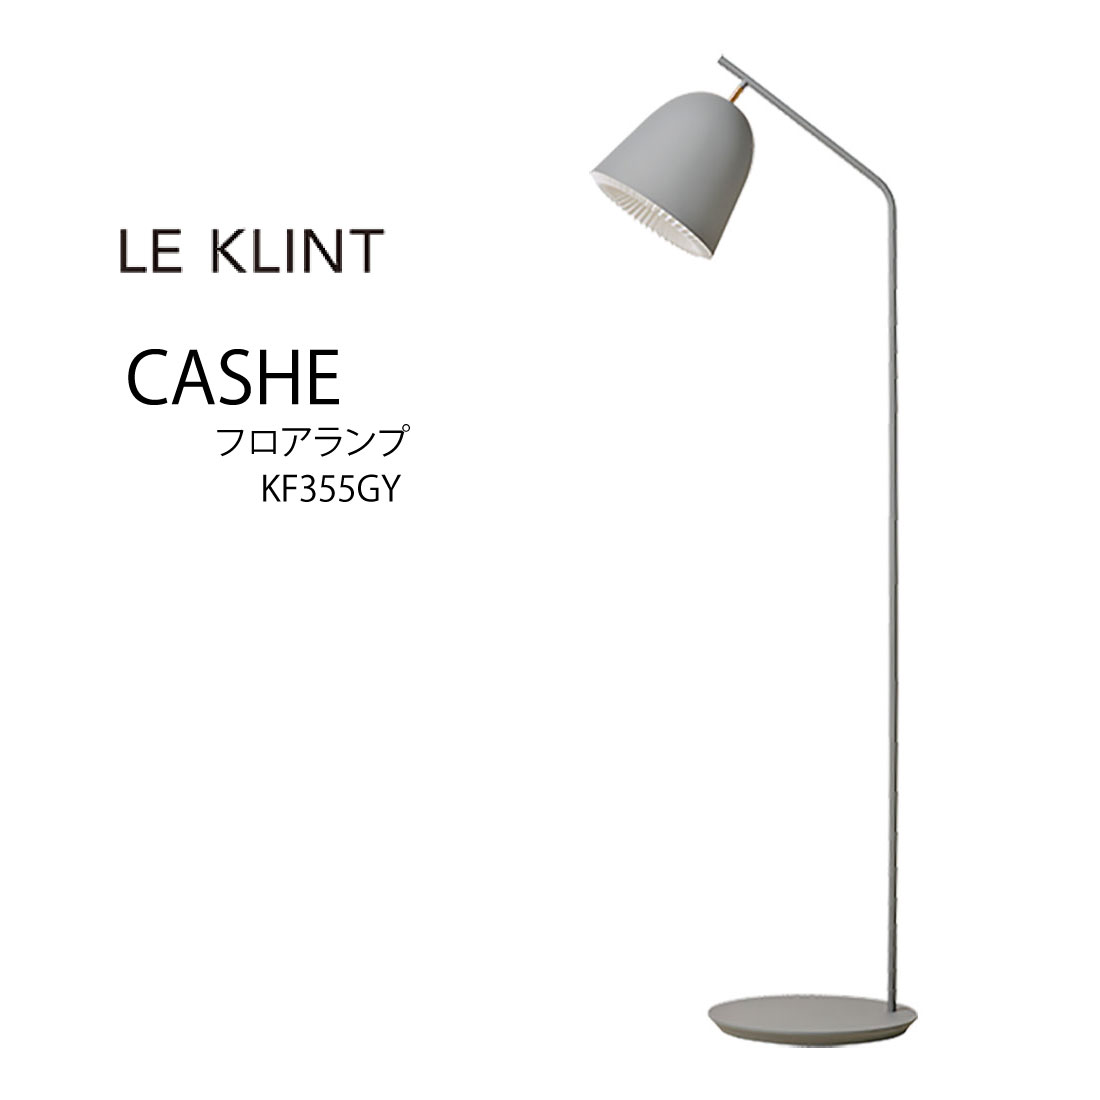 LE KLINT レ クリント CACHE キャシェ フロアランプ グレー オルリアン・バルブリ 照明 KF355GY